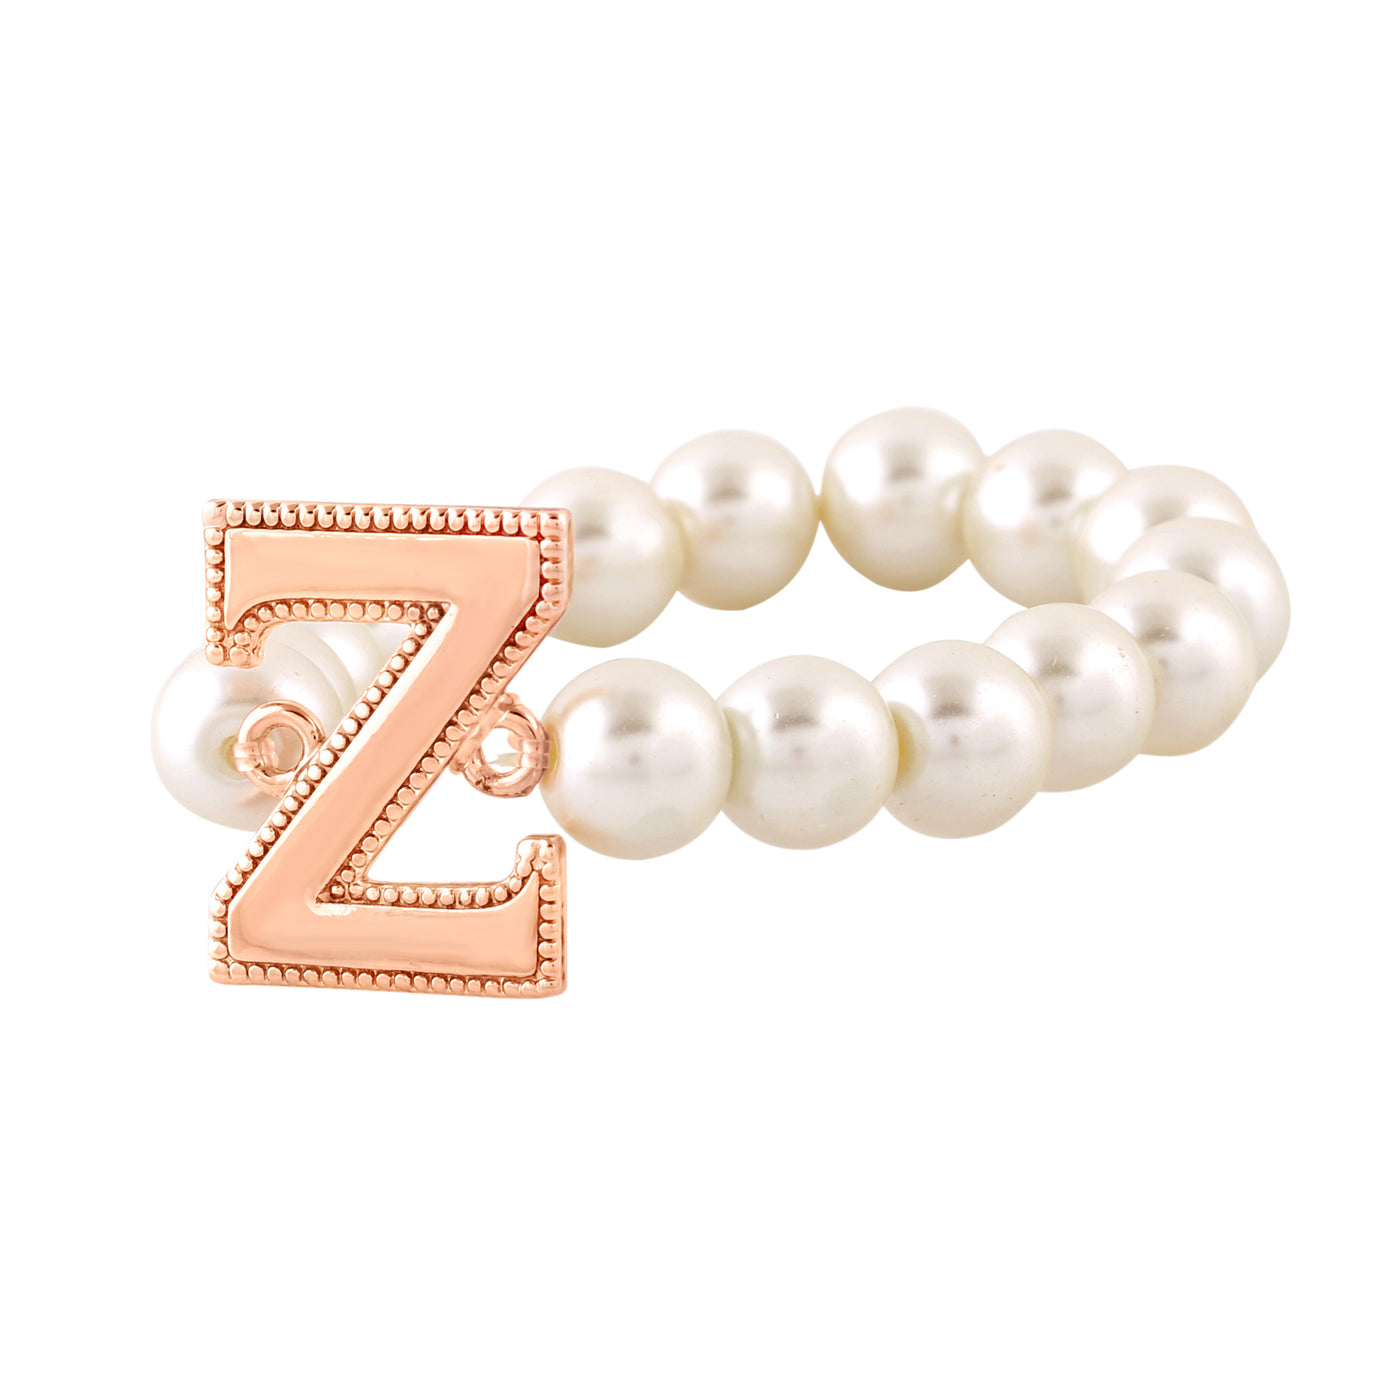 A To Z Infinity shaped With Elephant Name Bracelet – Stayclassy.in